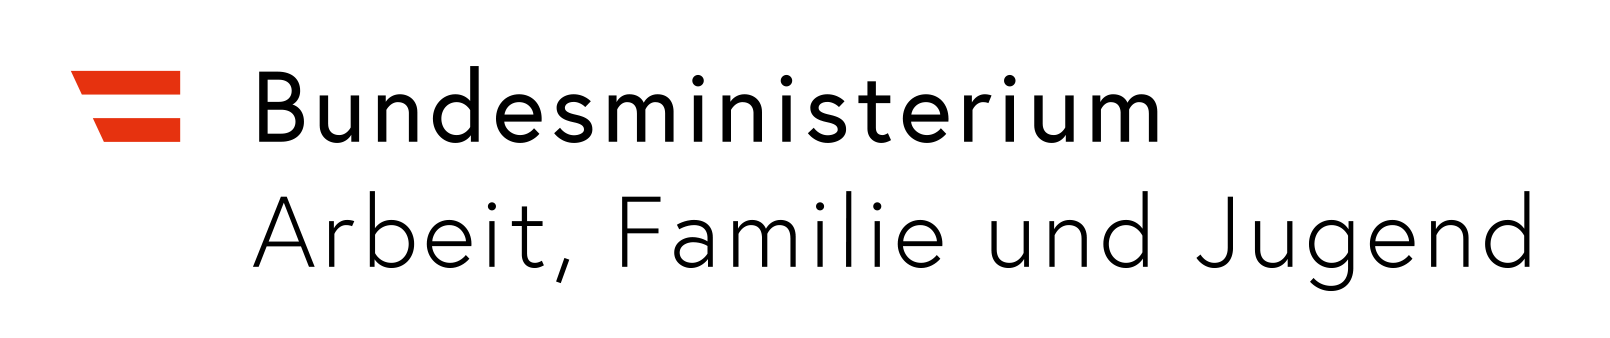 BMAFJ Logo srgb